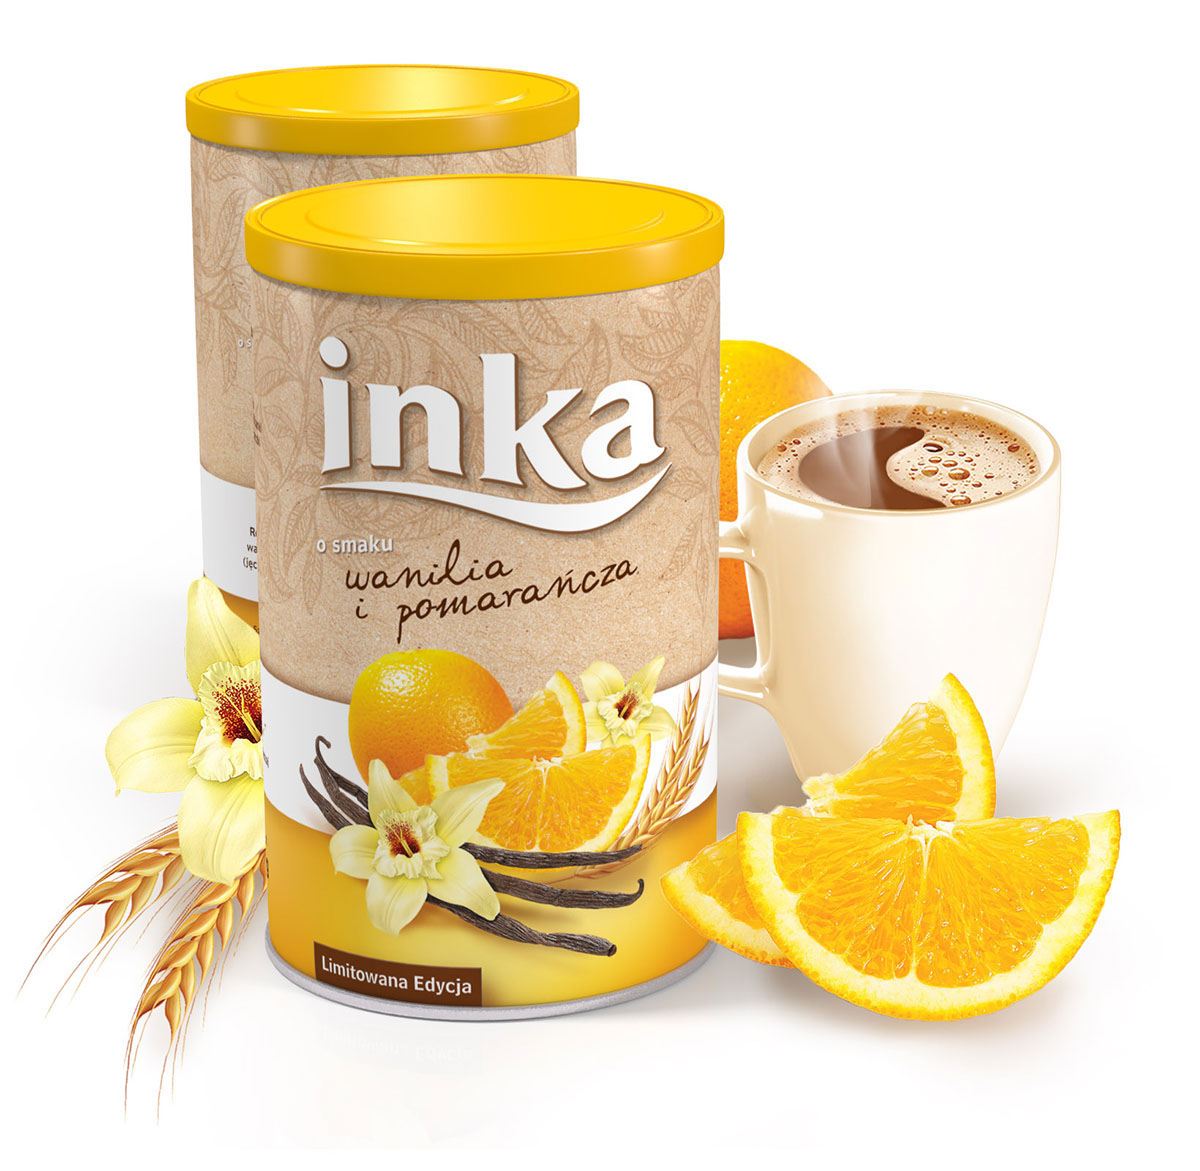 Coffee  grain  cereal natural  classic  vanilla  orange  taste